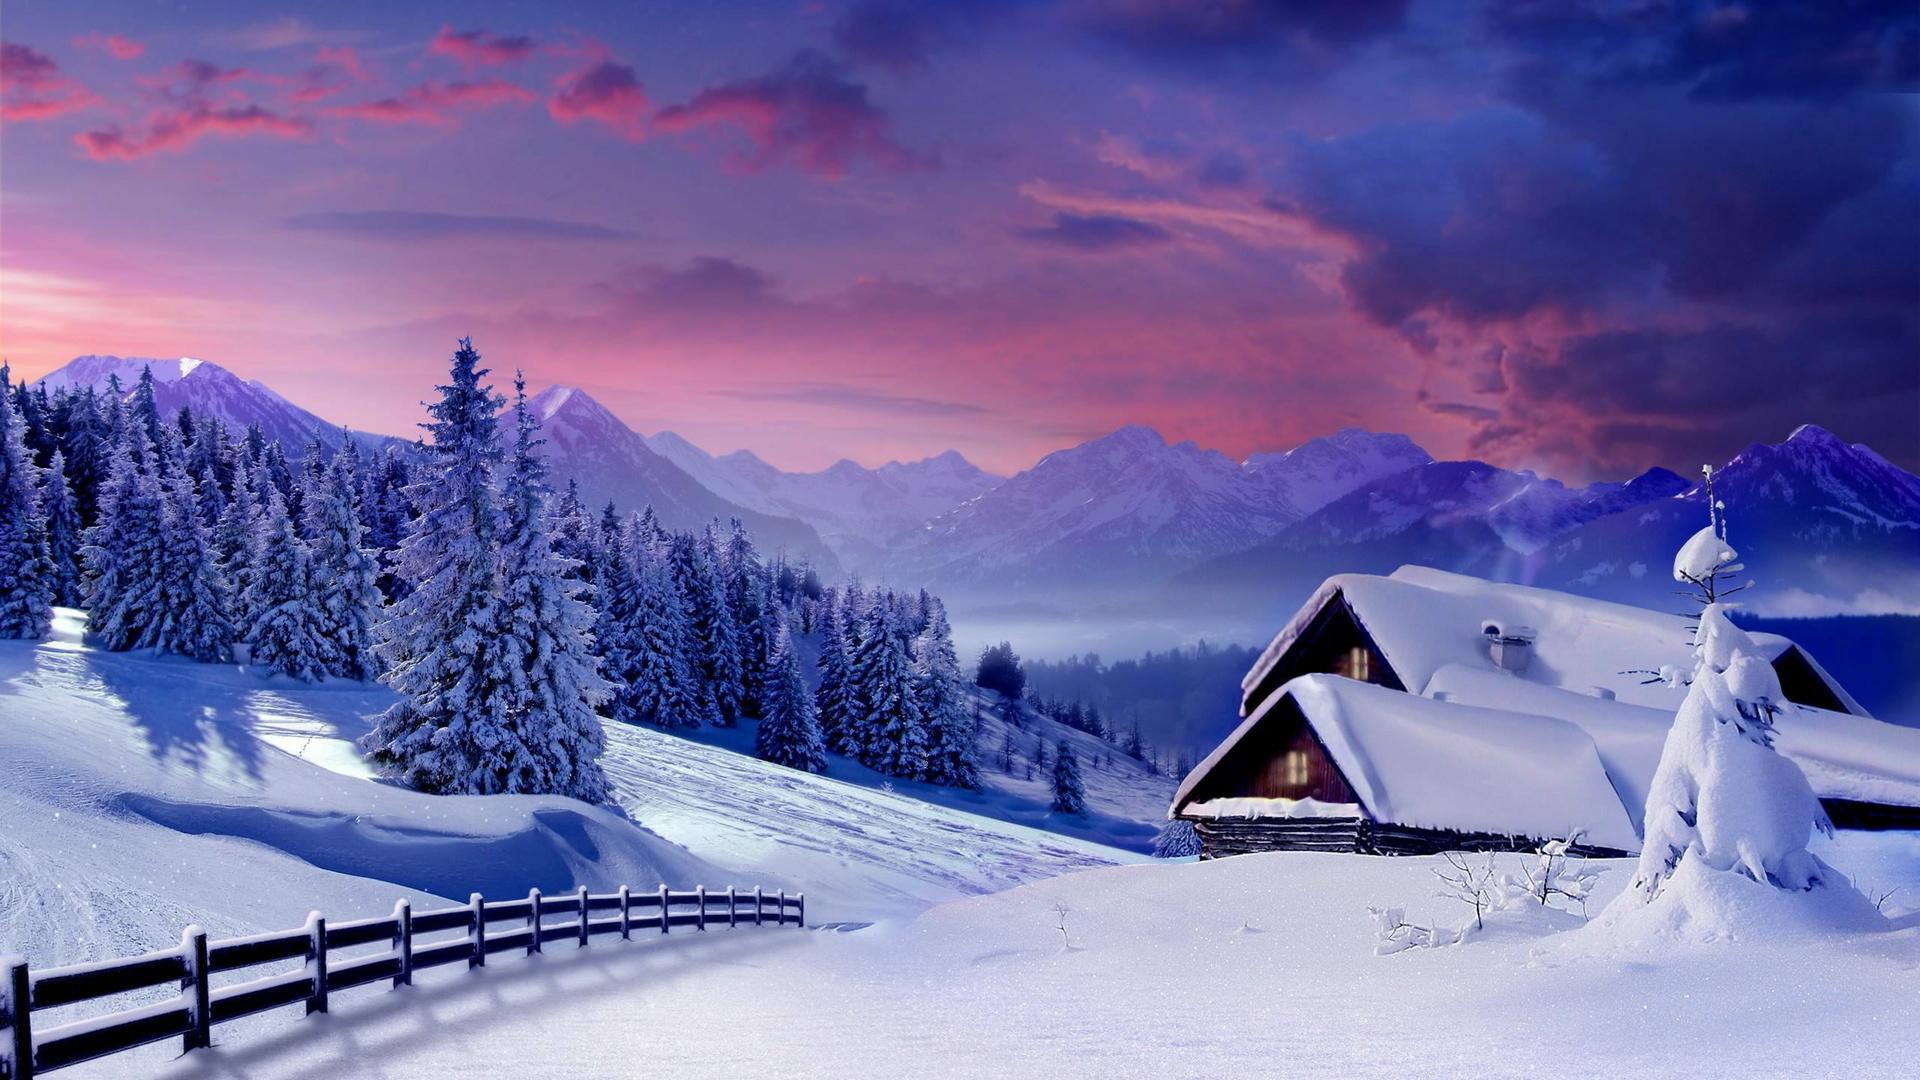 Картинки дом, избушка, снег, зима, елки, лес, сугробы, горы, облака, забор.  - обои 1920x1080, картинка №68008